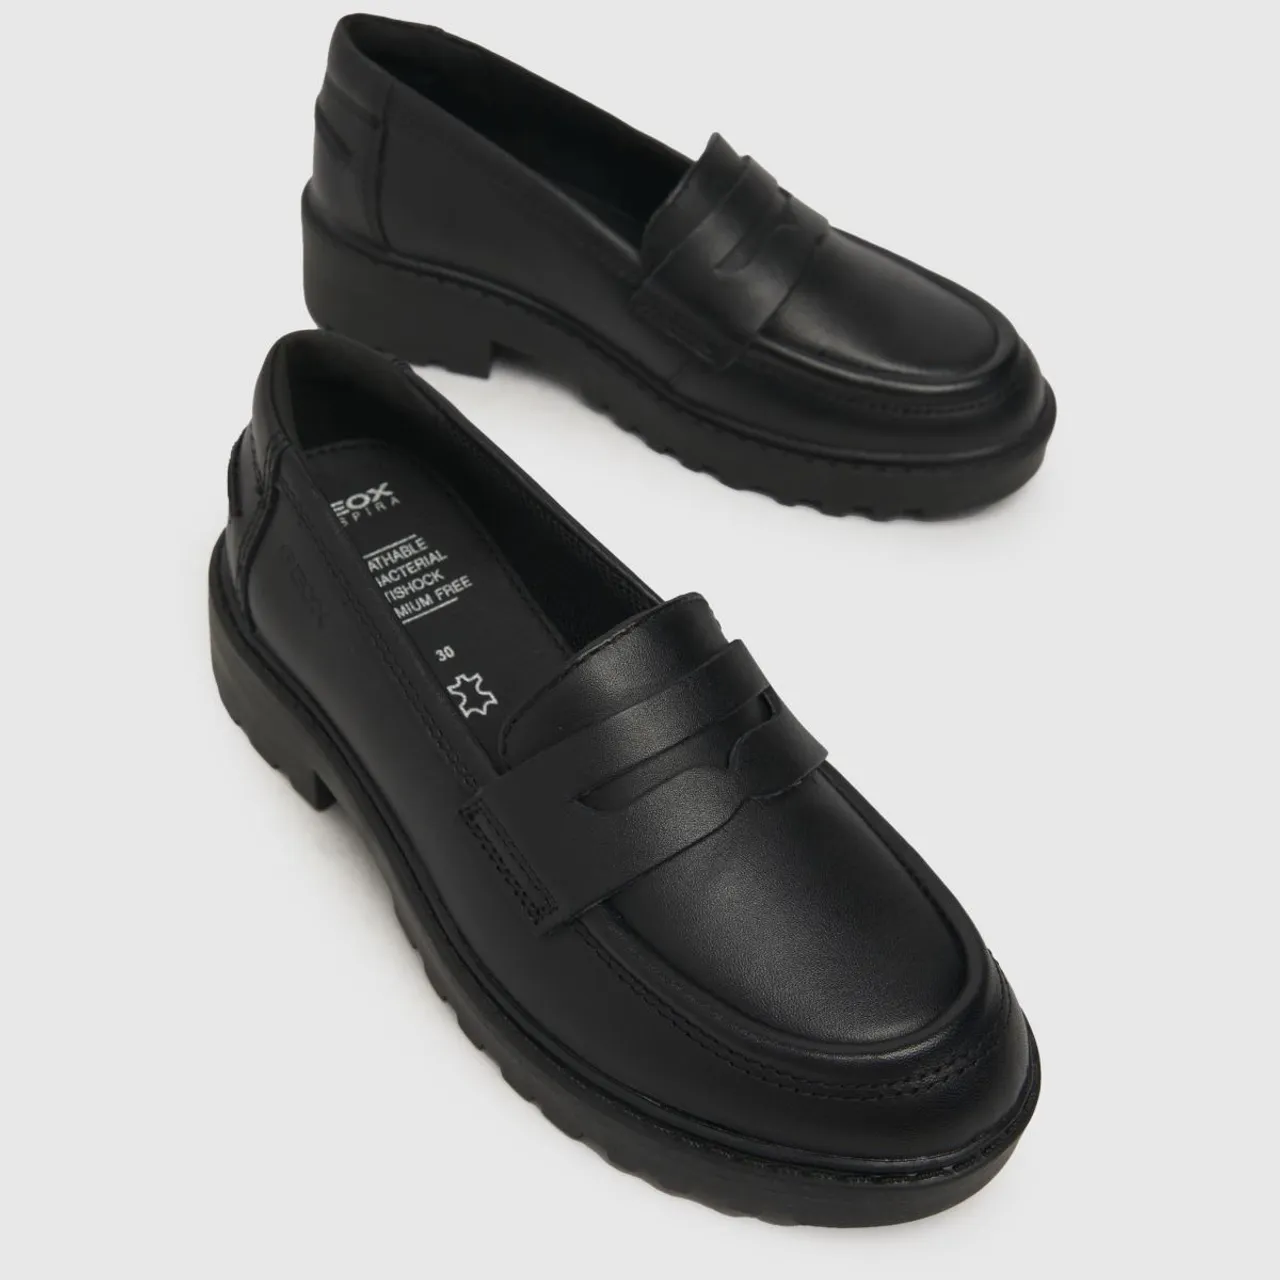 Geox Black Casey Moccasins Girls Junior Shoes